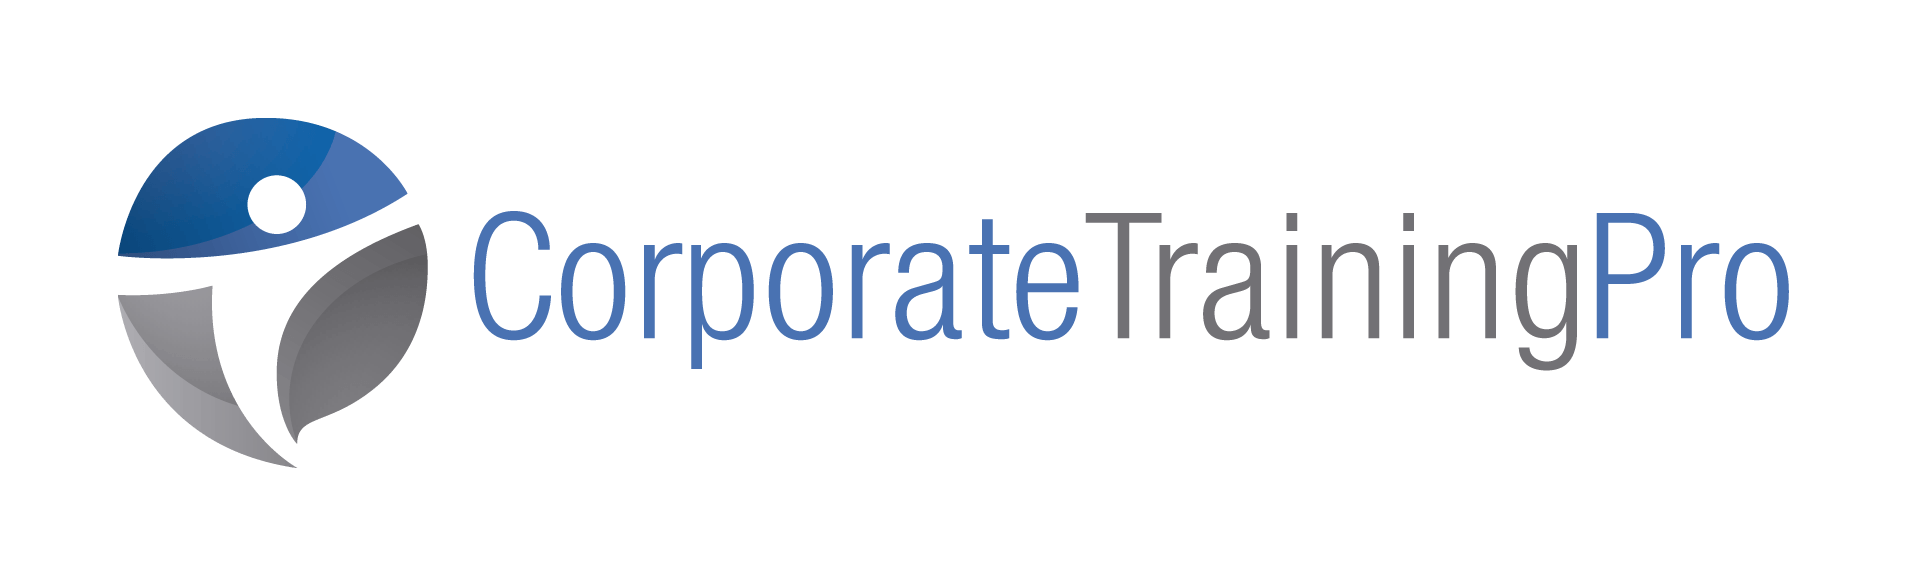 Corporate Training Logo - Home Training Pro